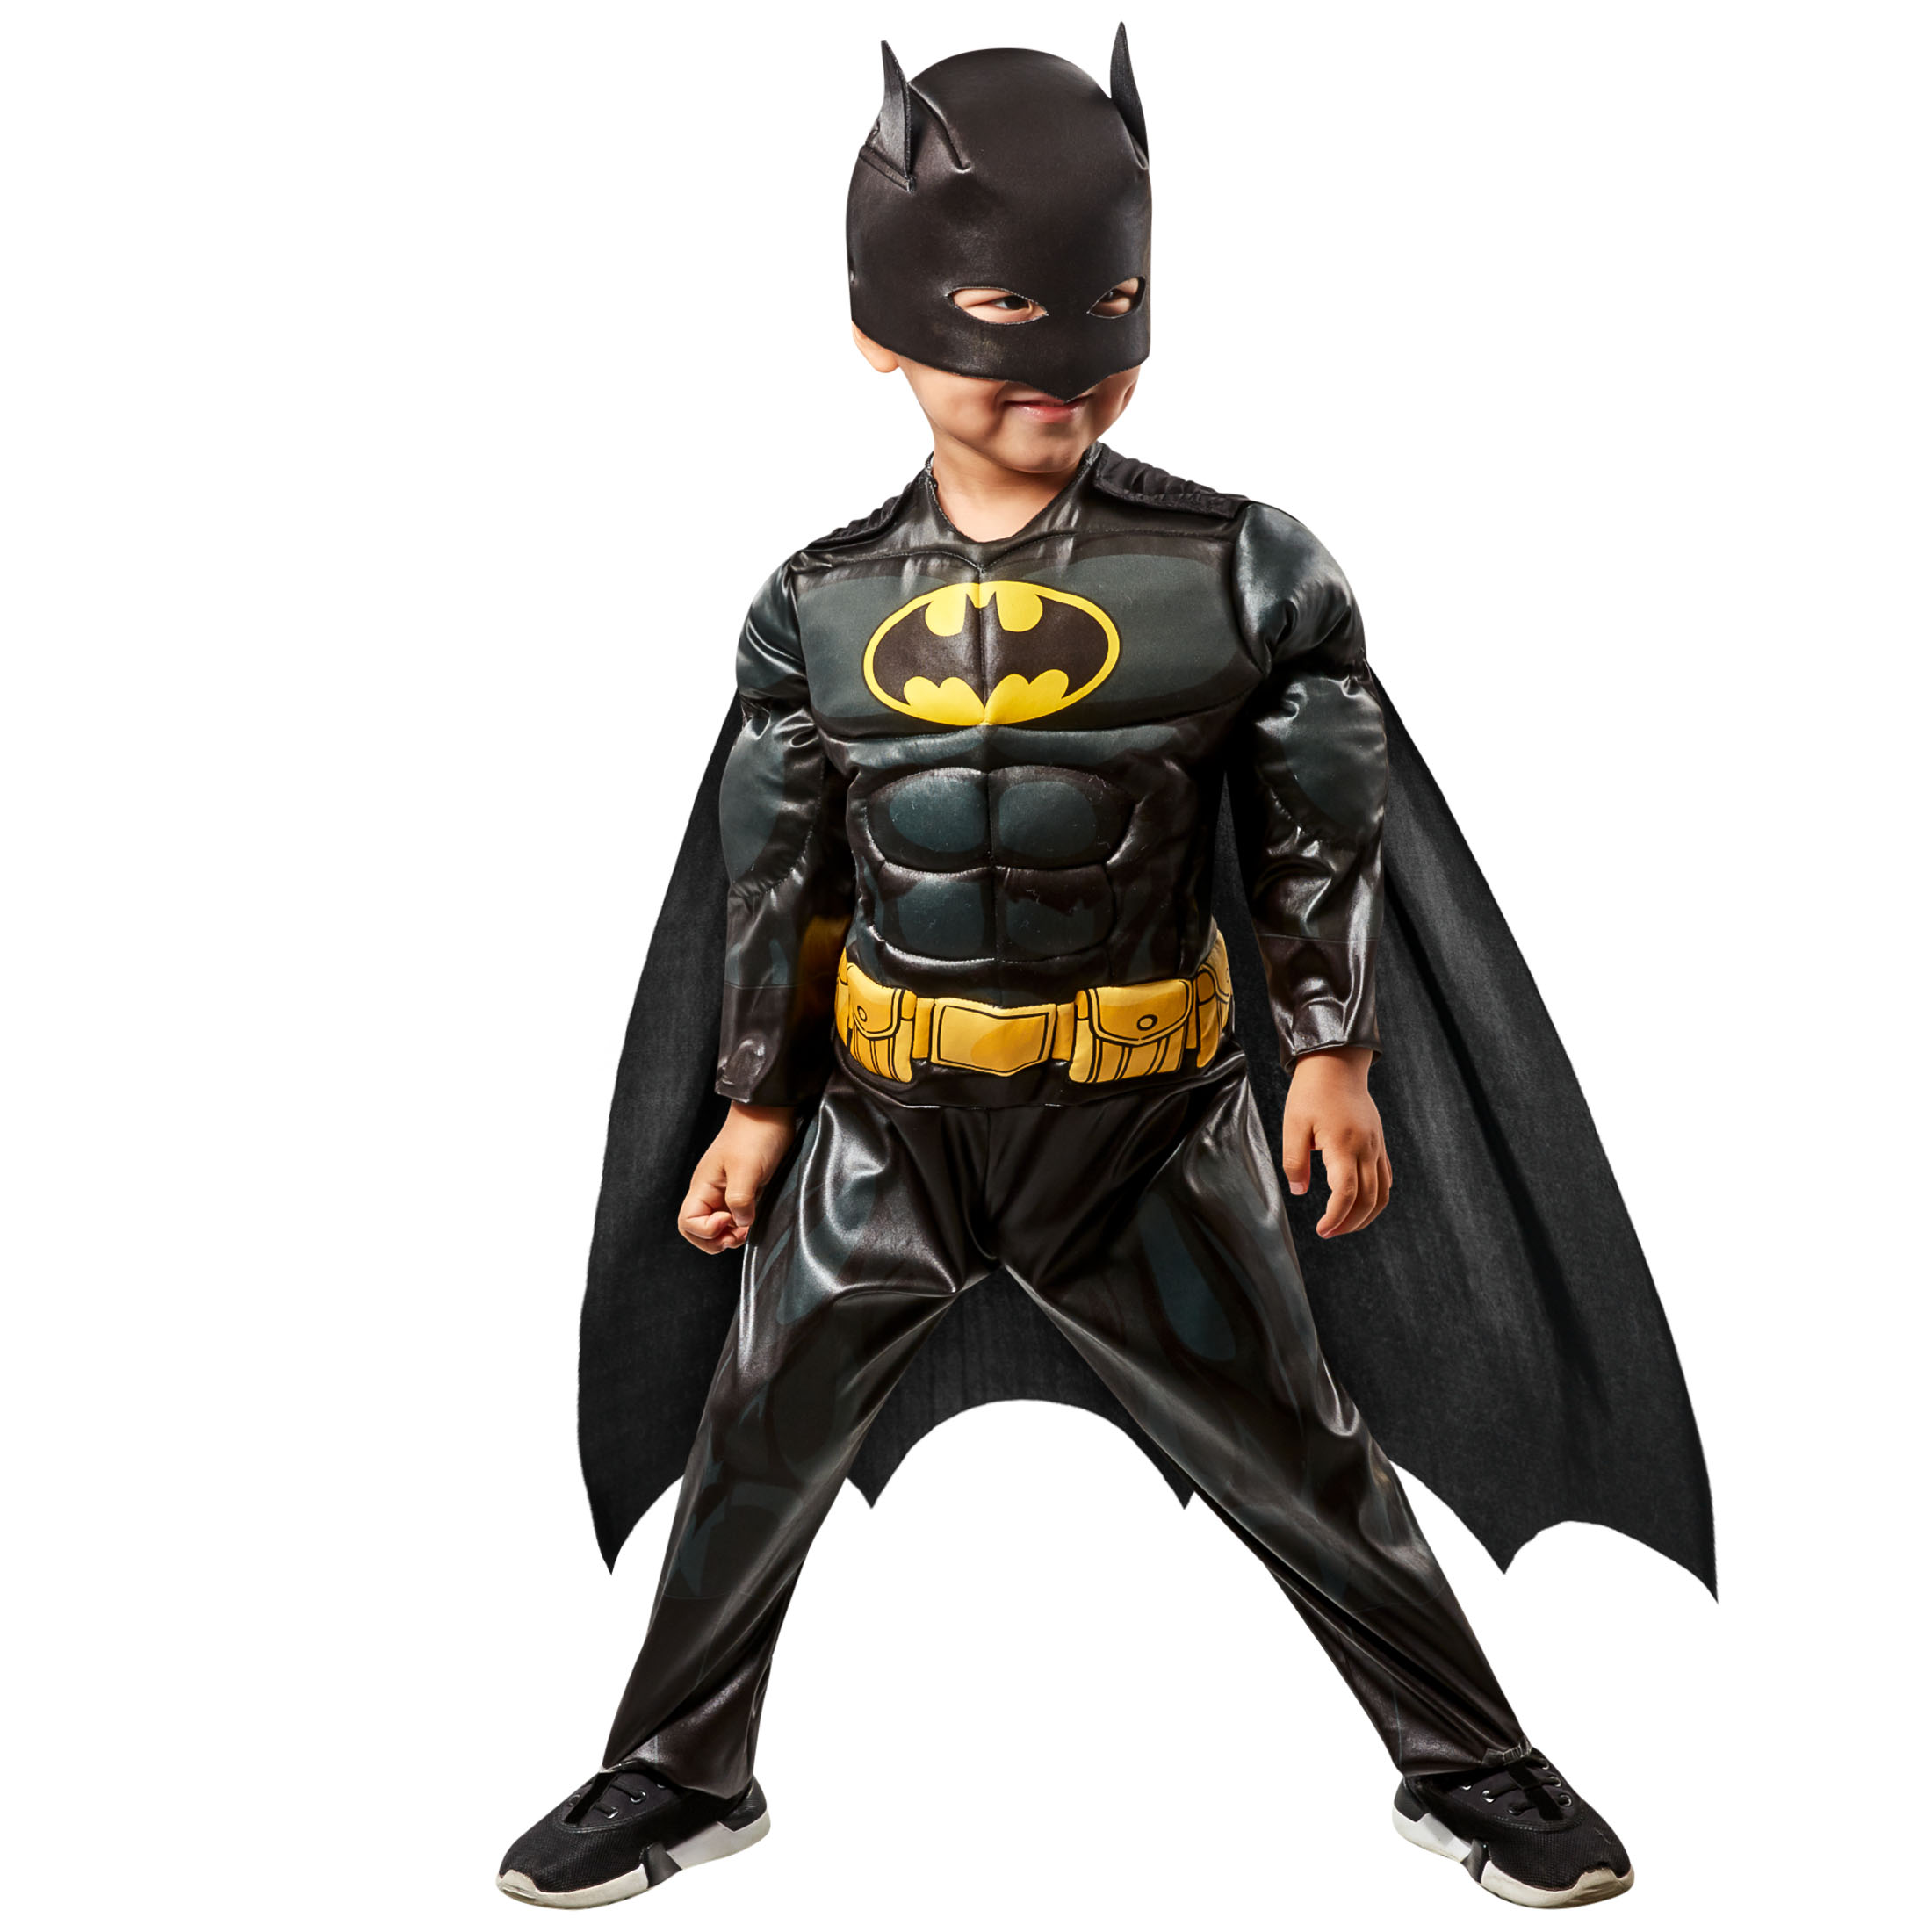 Batman Toddler Halloween Costume 4T By Rubies II